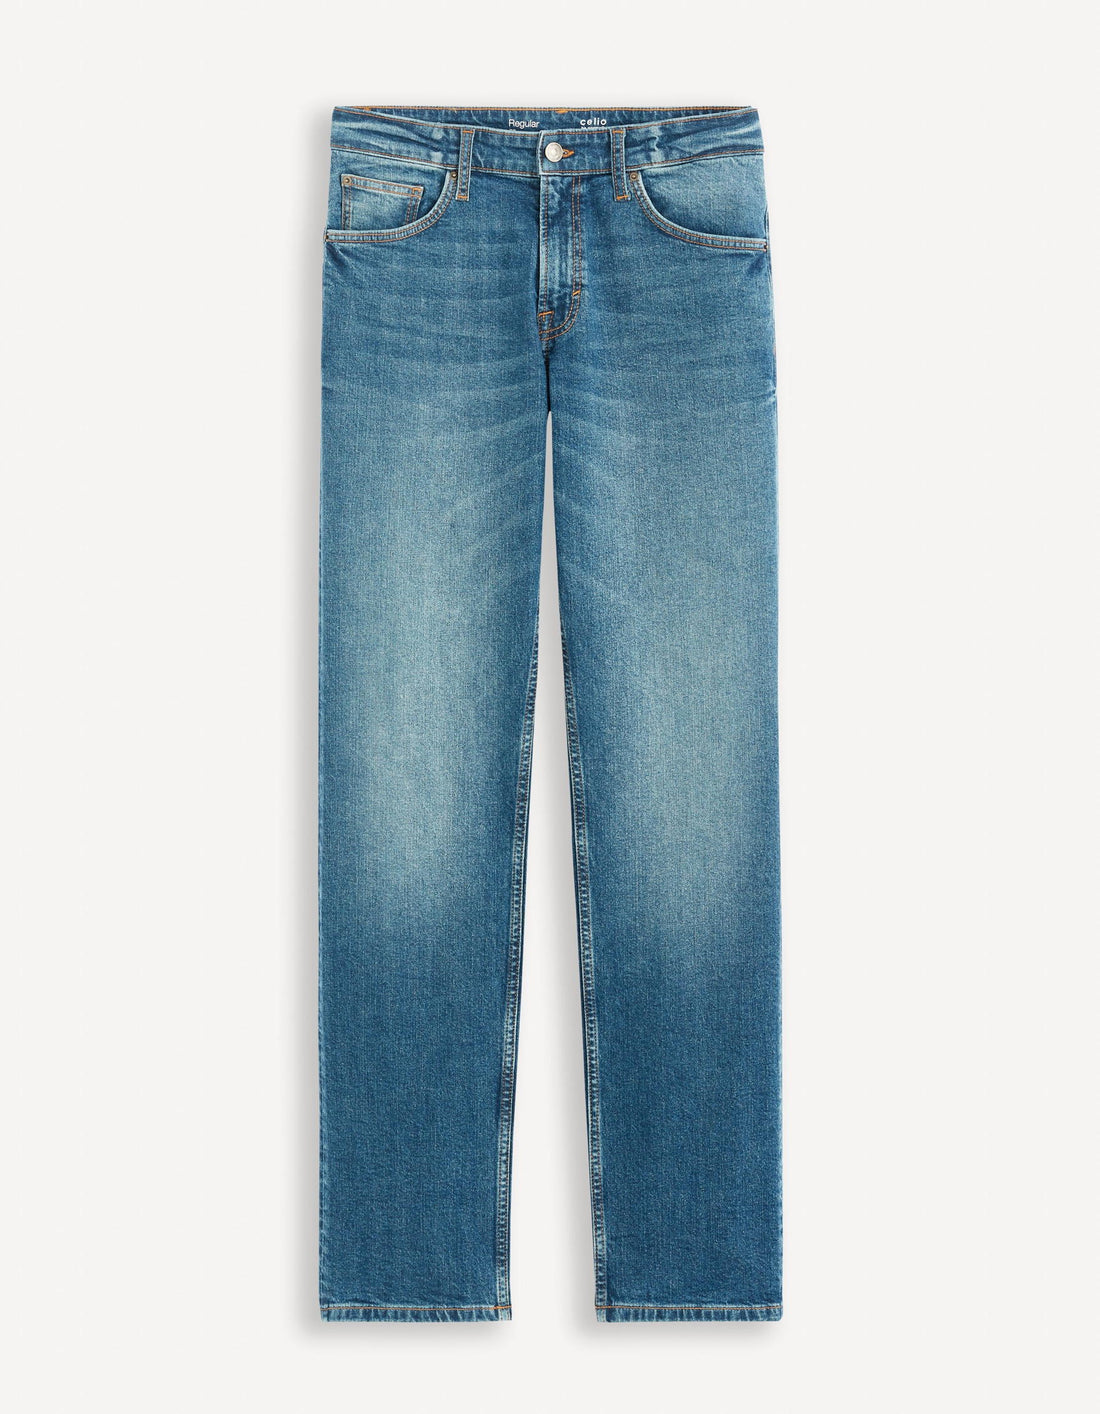 Regular C5 Stretch Jeans 3 Lengths_REGULAR3L_DOUBLE STONE_01